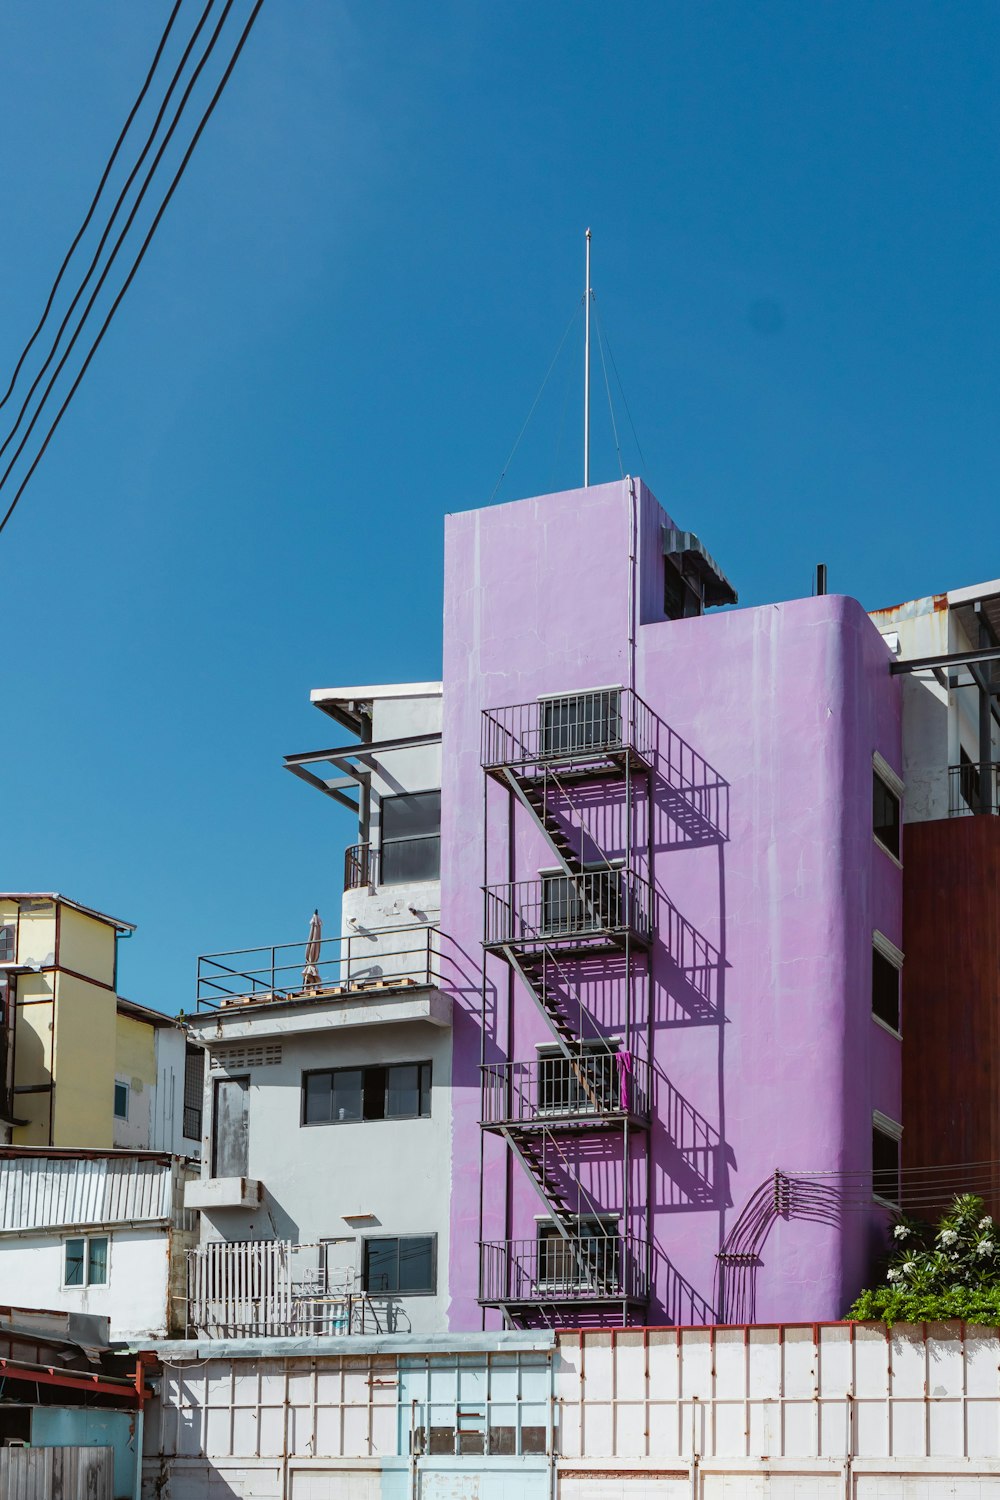 a purple building with a fire escape next to it